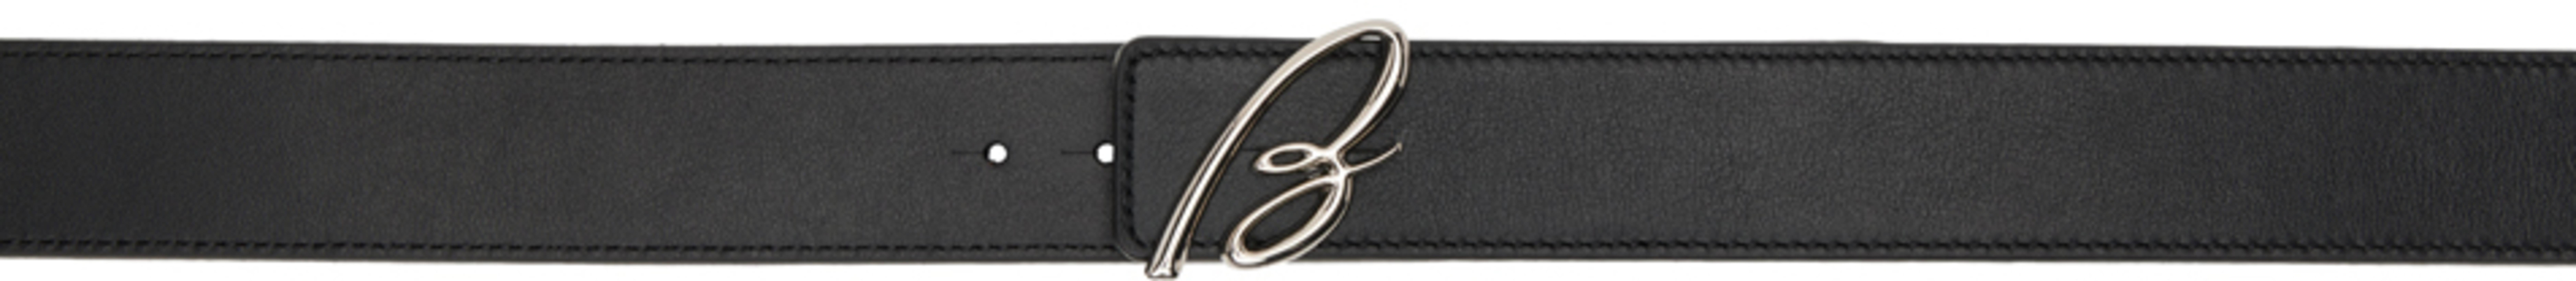 Black Leather Belt by BRIONI